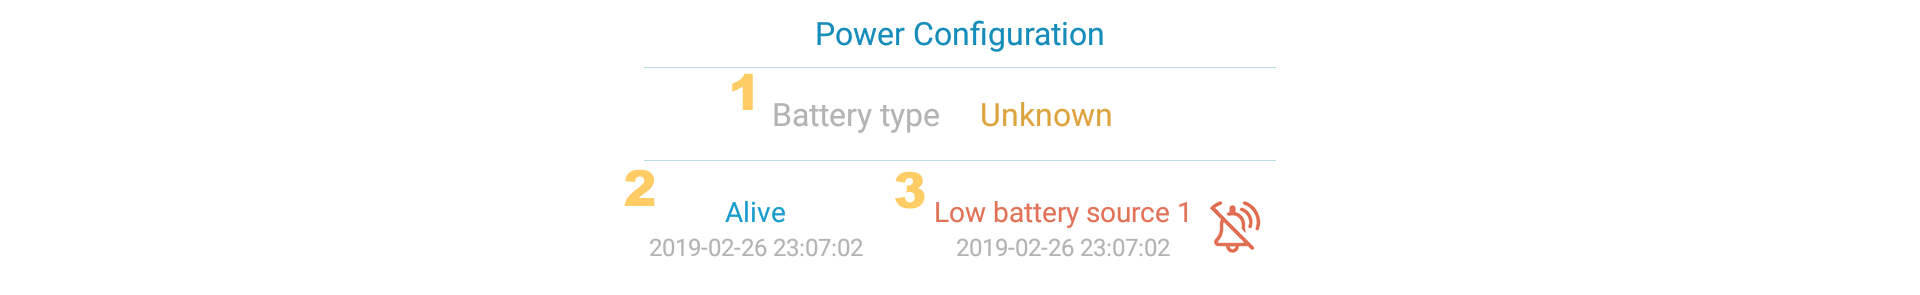 power configuration example 1